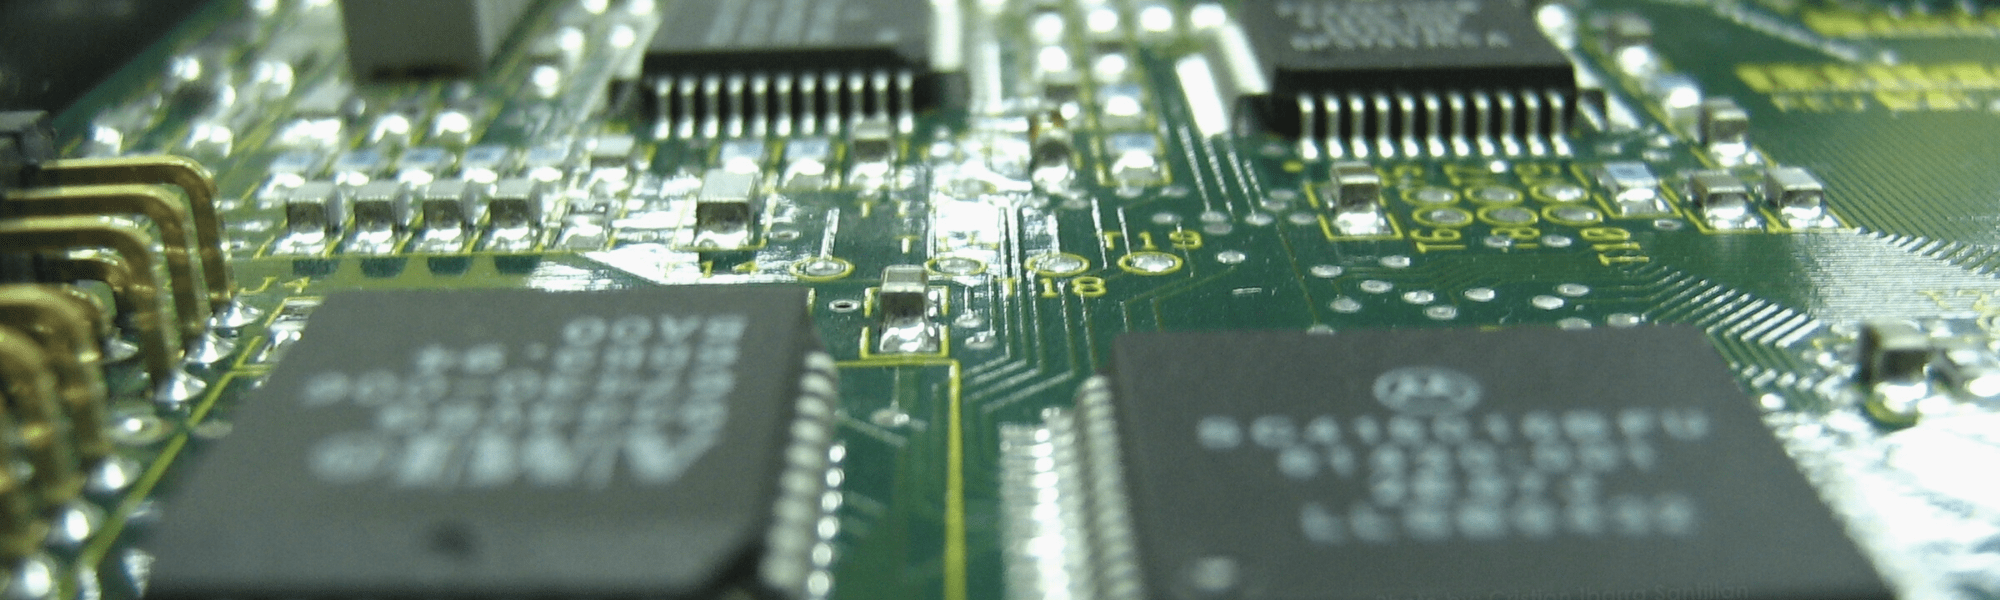 Microchips on Circuit Board